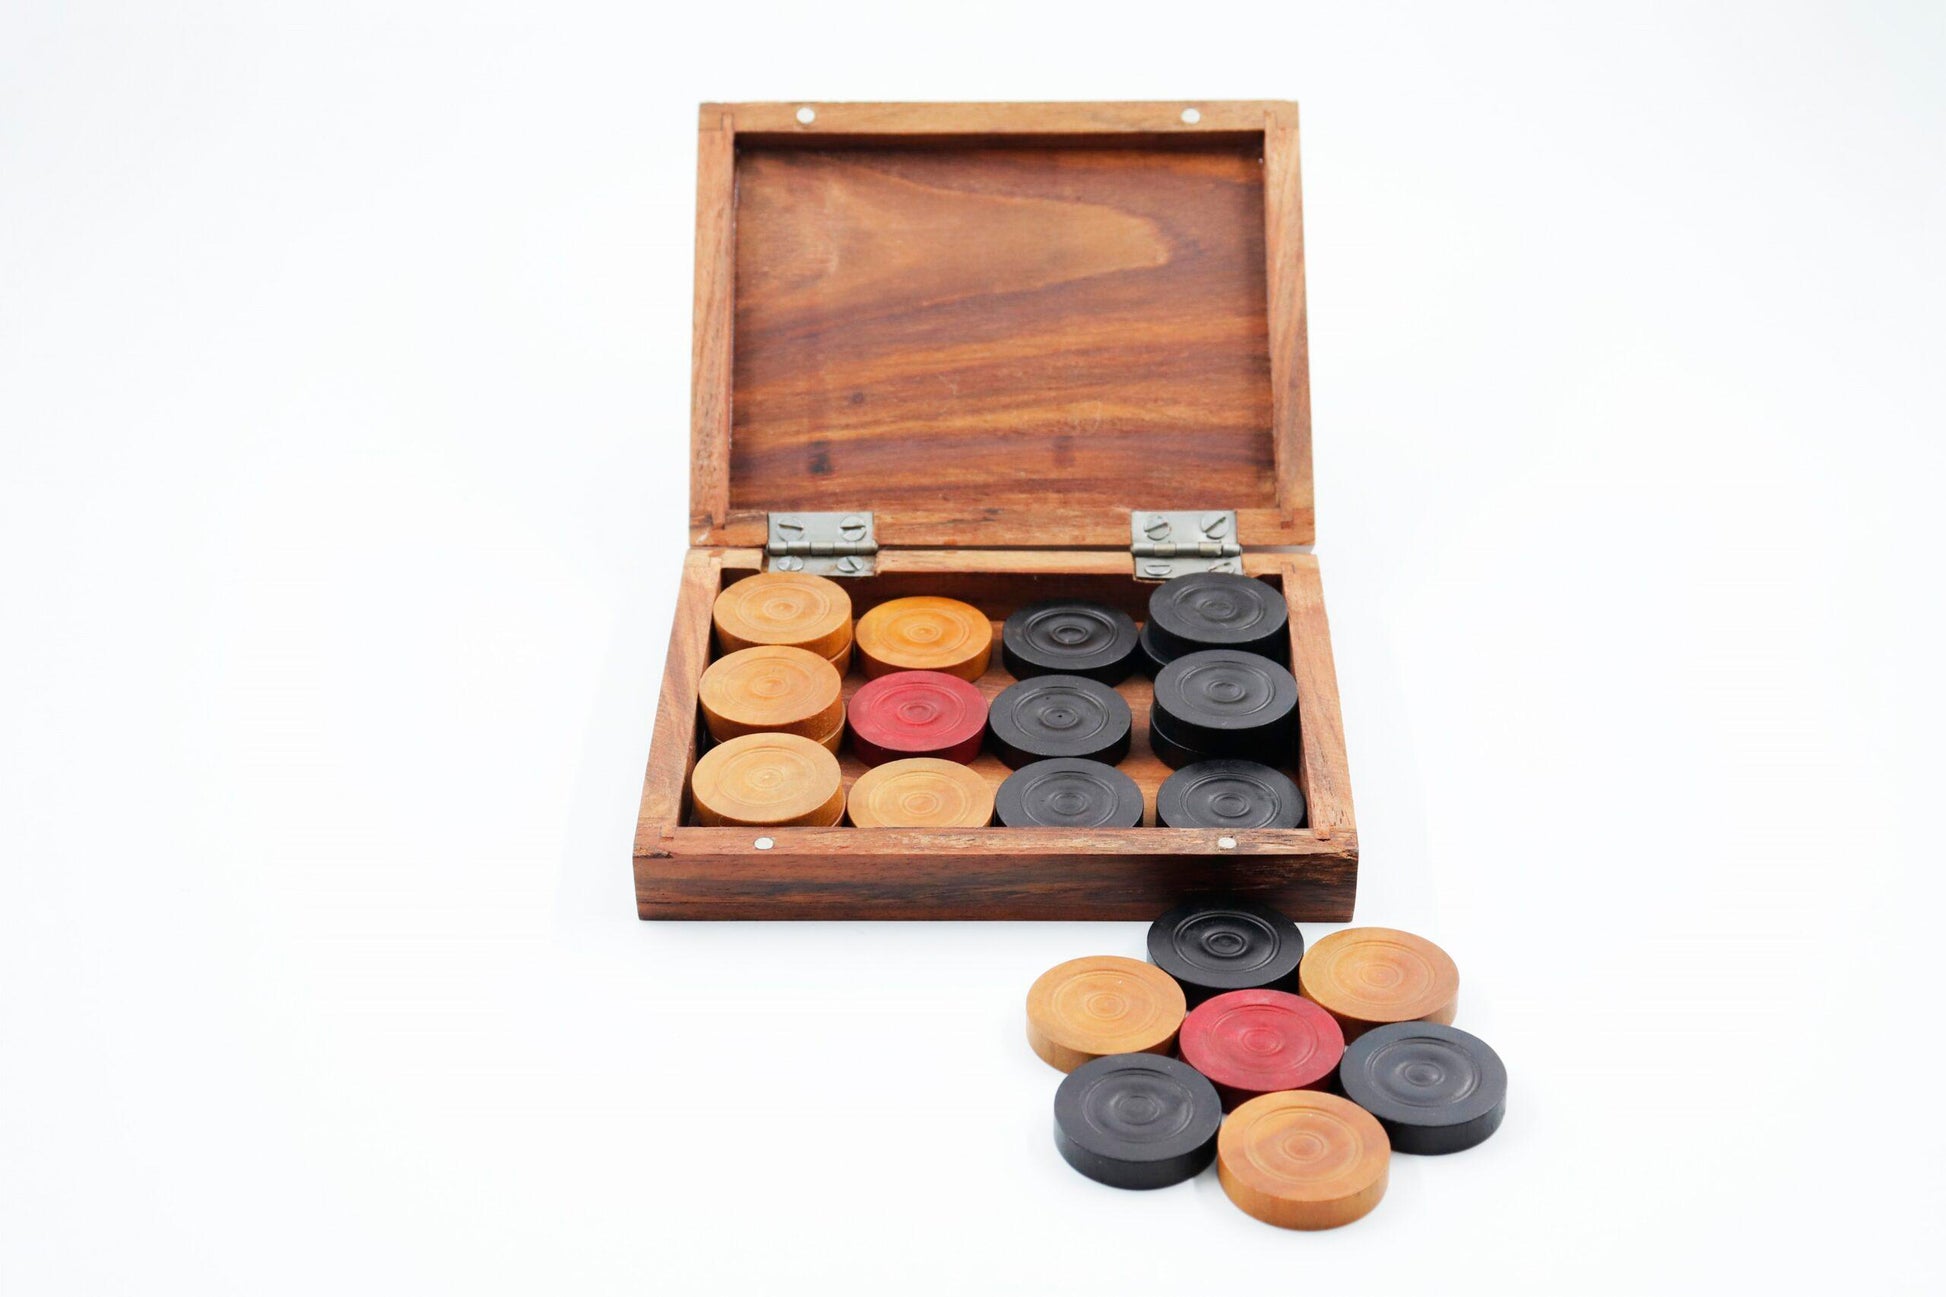 Synco Premia Carrom Board Coins in Sheesham wooden Box - 3